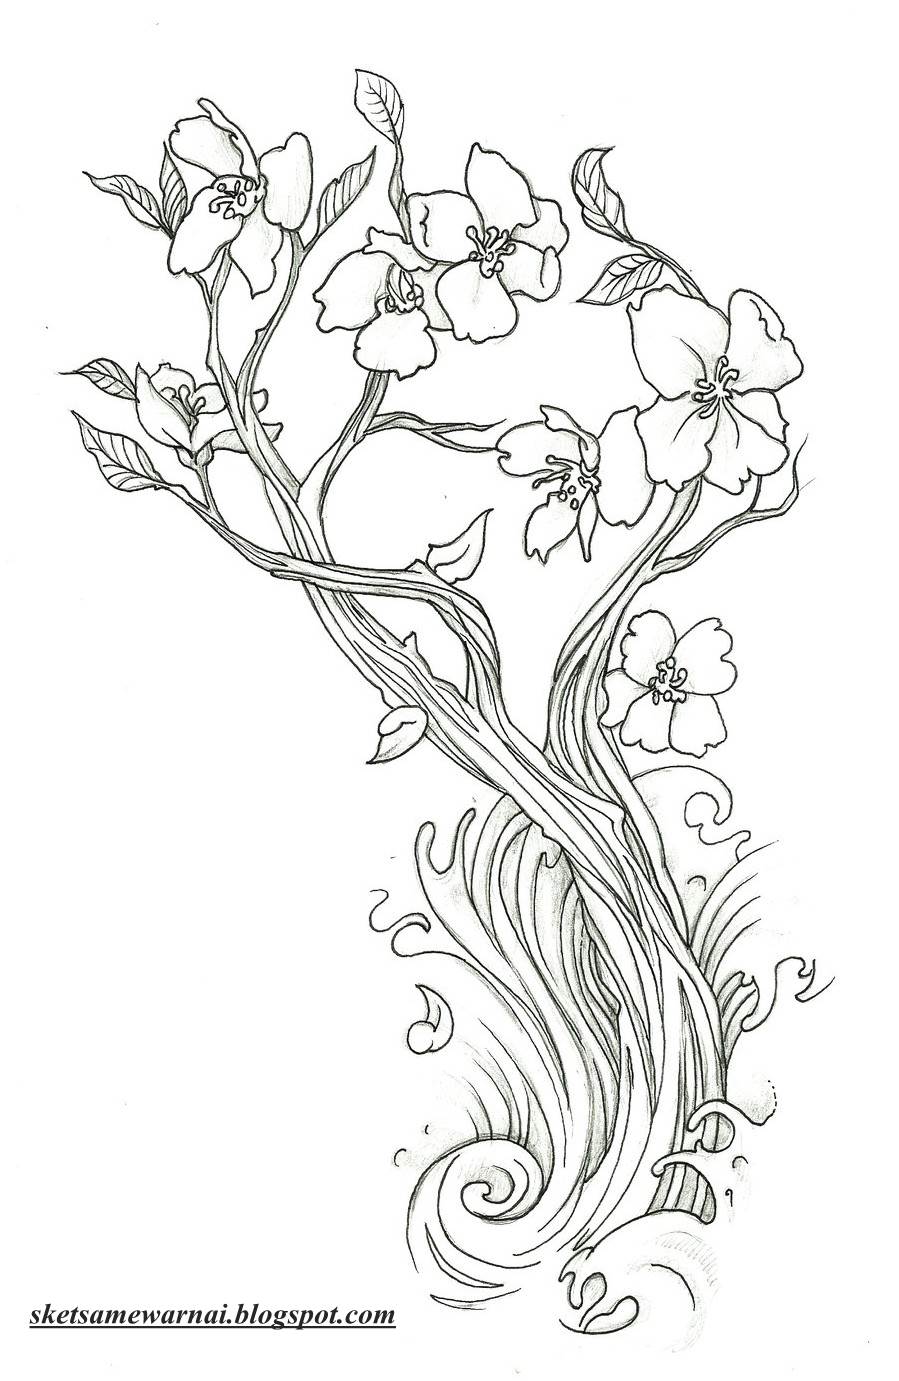 Sketsa Mewarnai Gambar Bunga Sakura - Sketsa Mewarnai